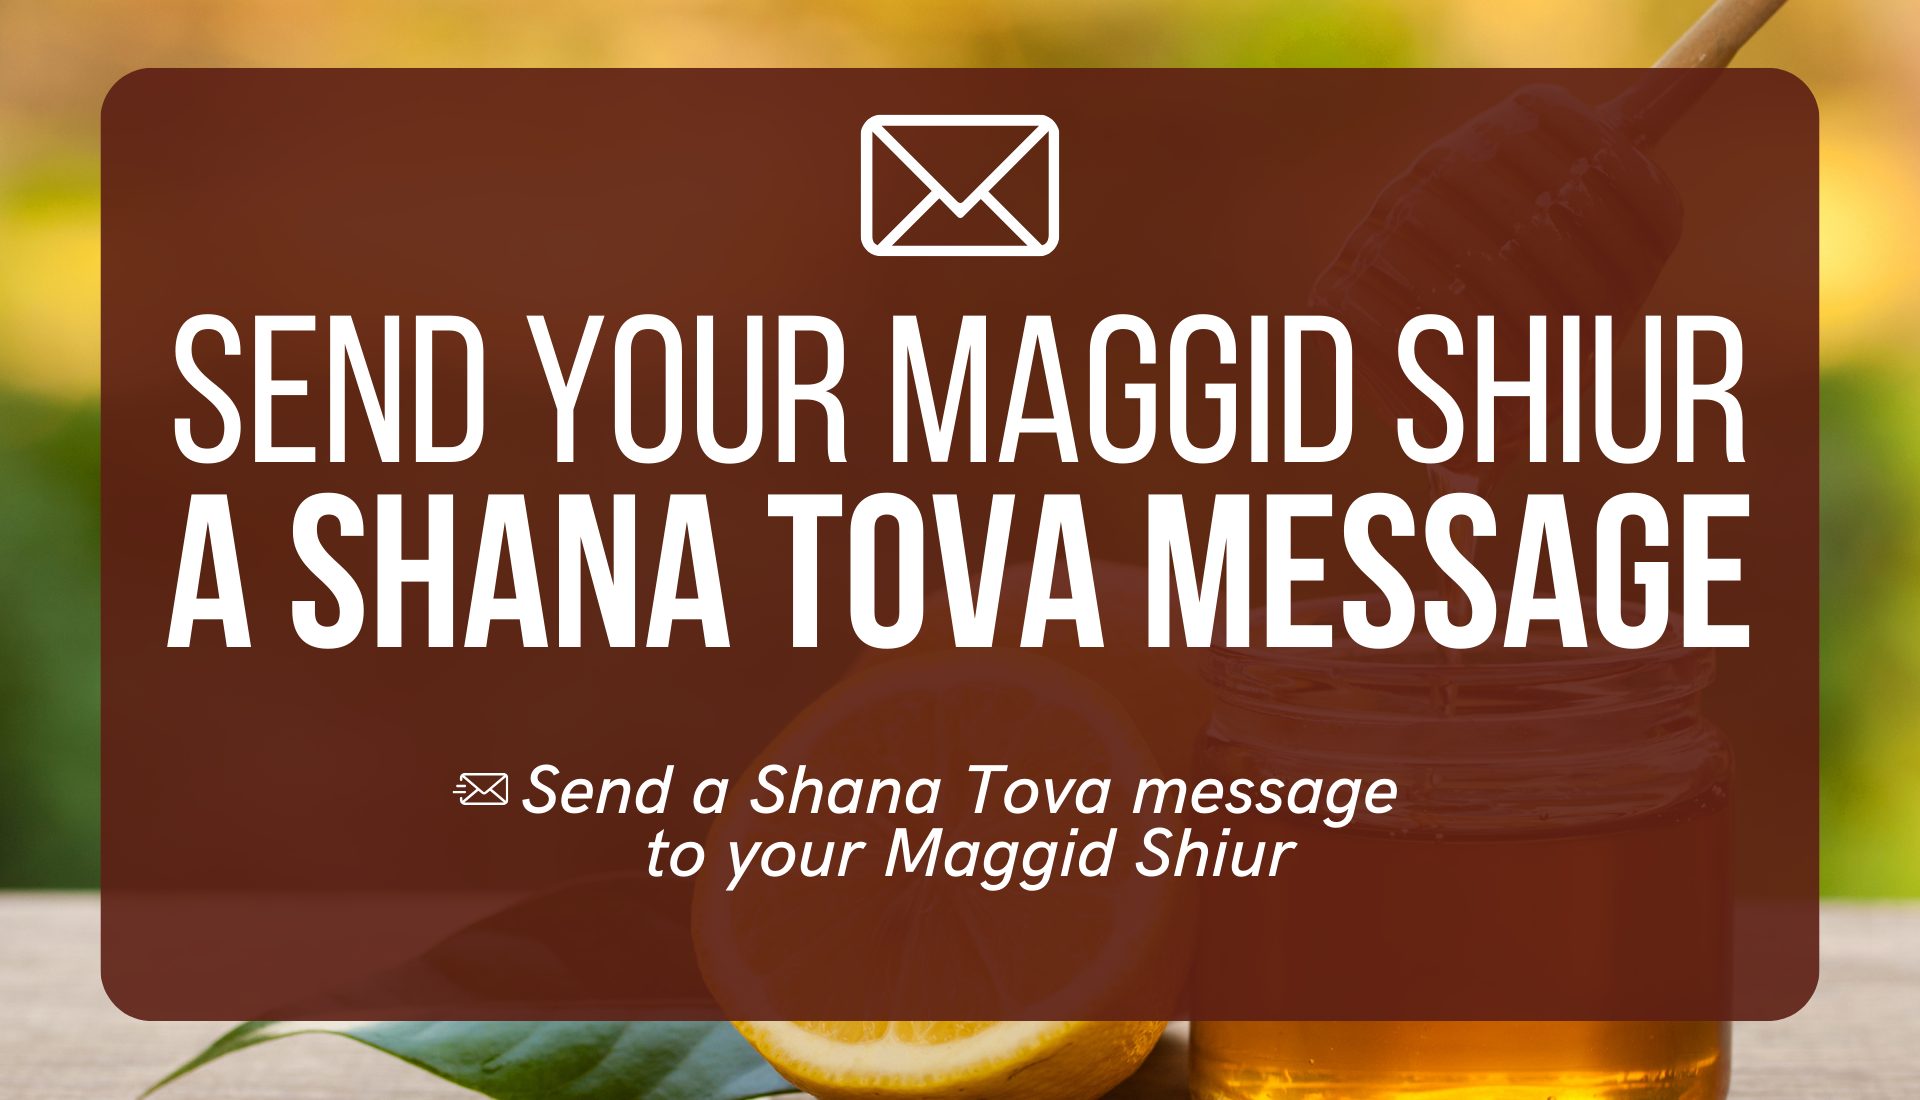 LAST CHANCE! Send Your Maggid Shiur A Shana Tova Message